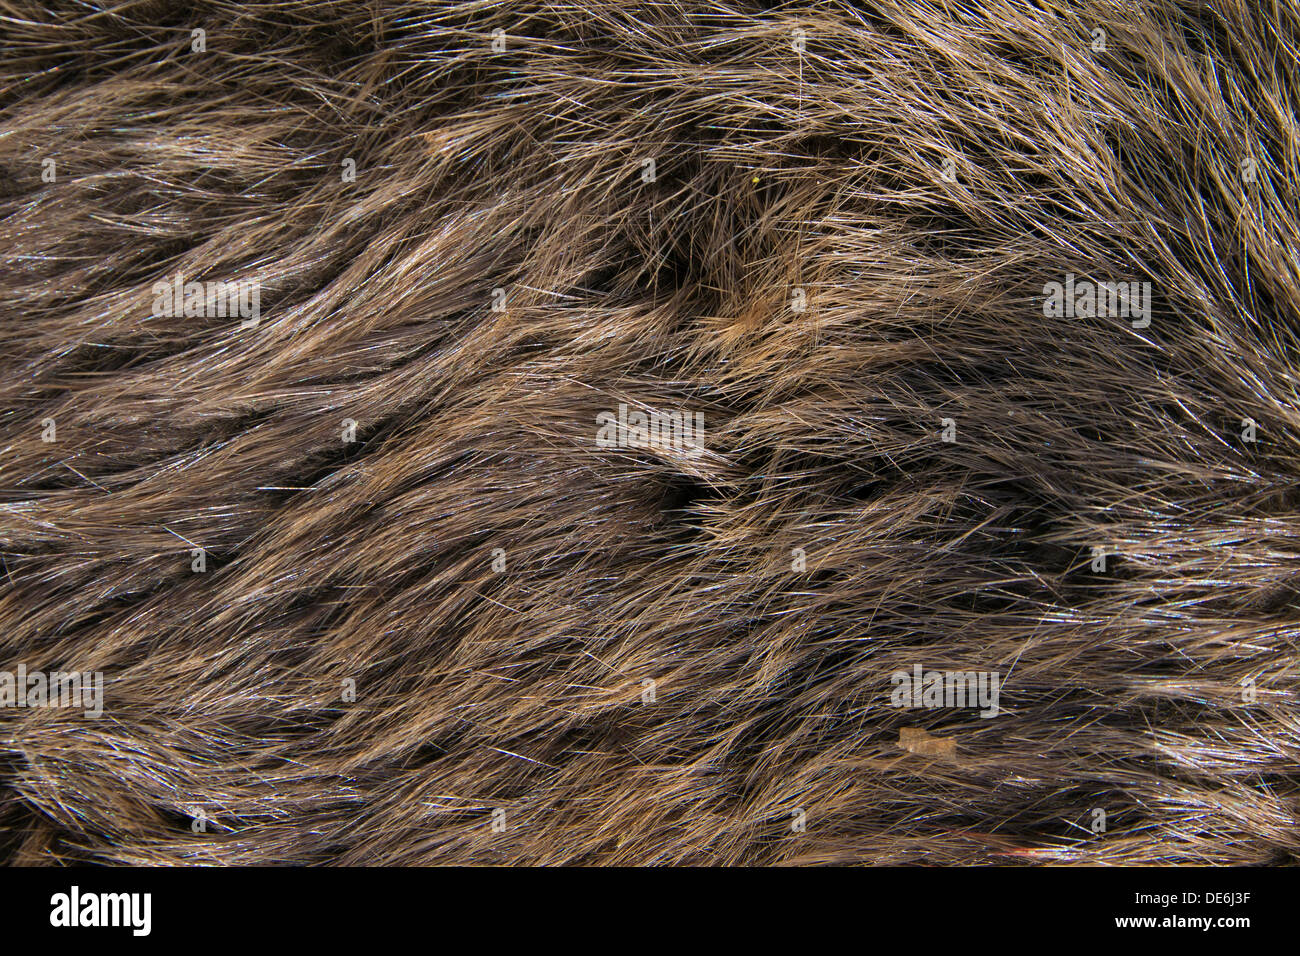 Castor européen (Castor fiber) close-up de pelage brun Banque D'Images